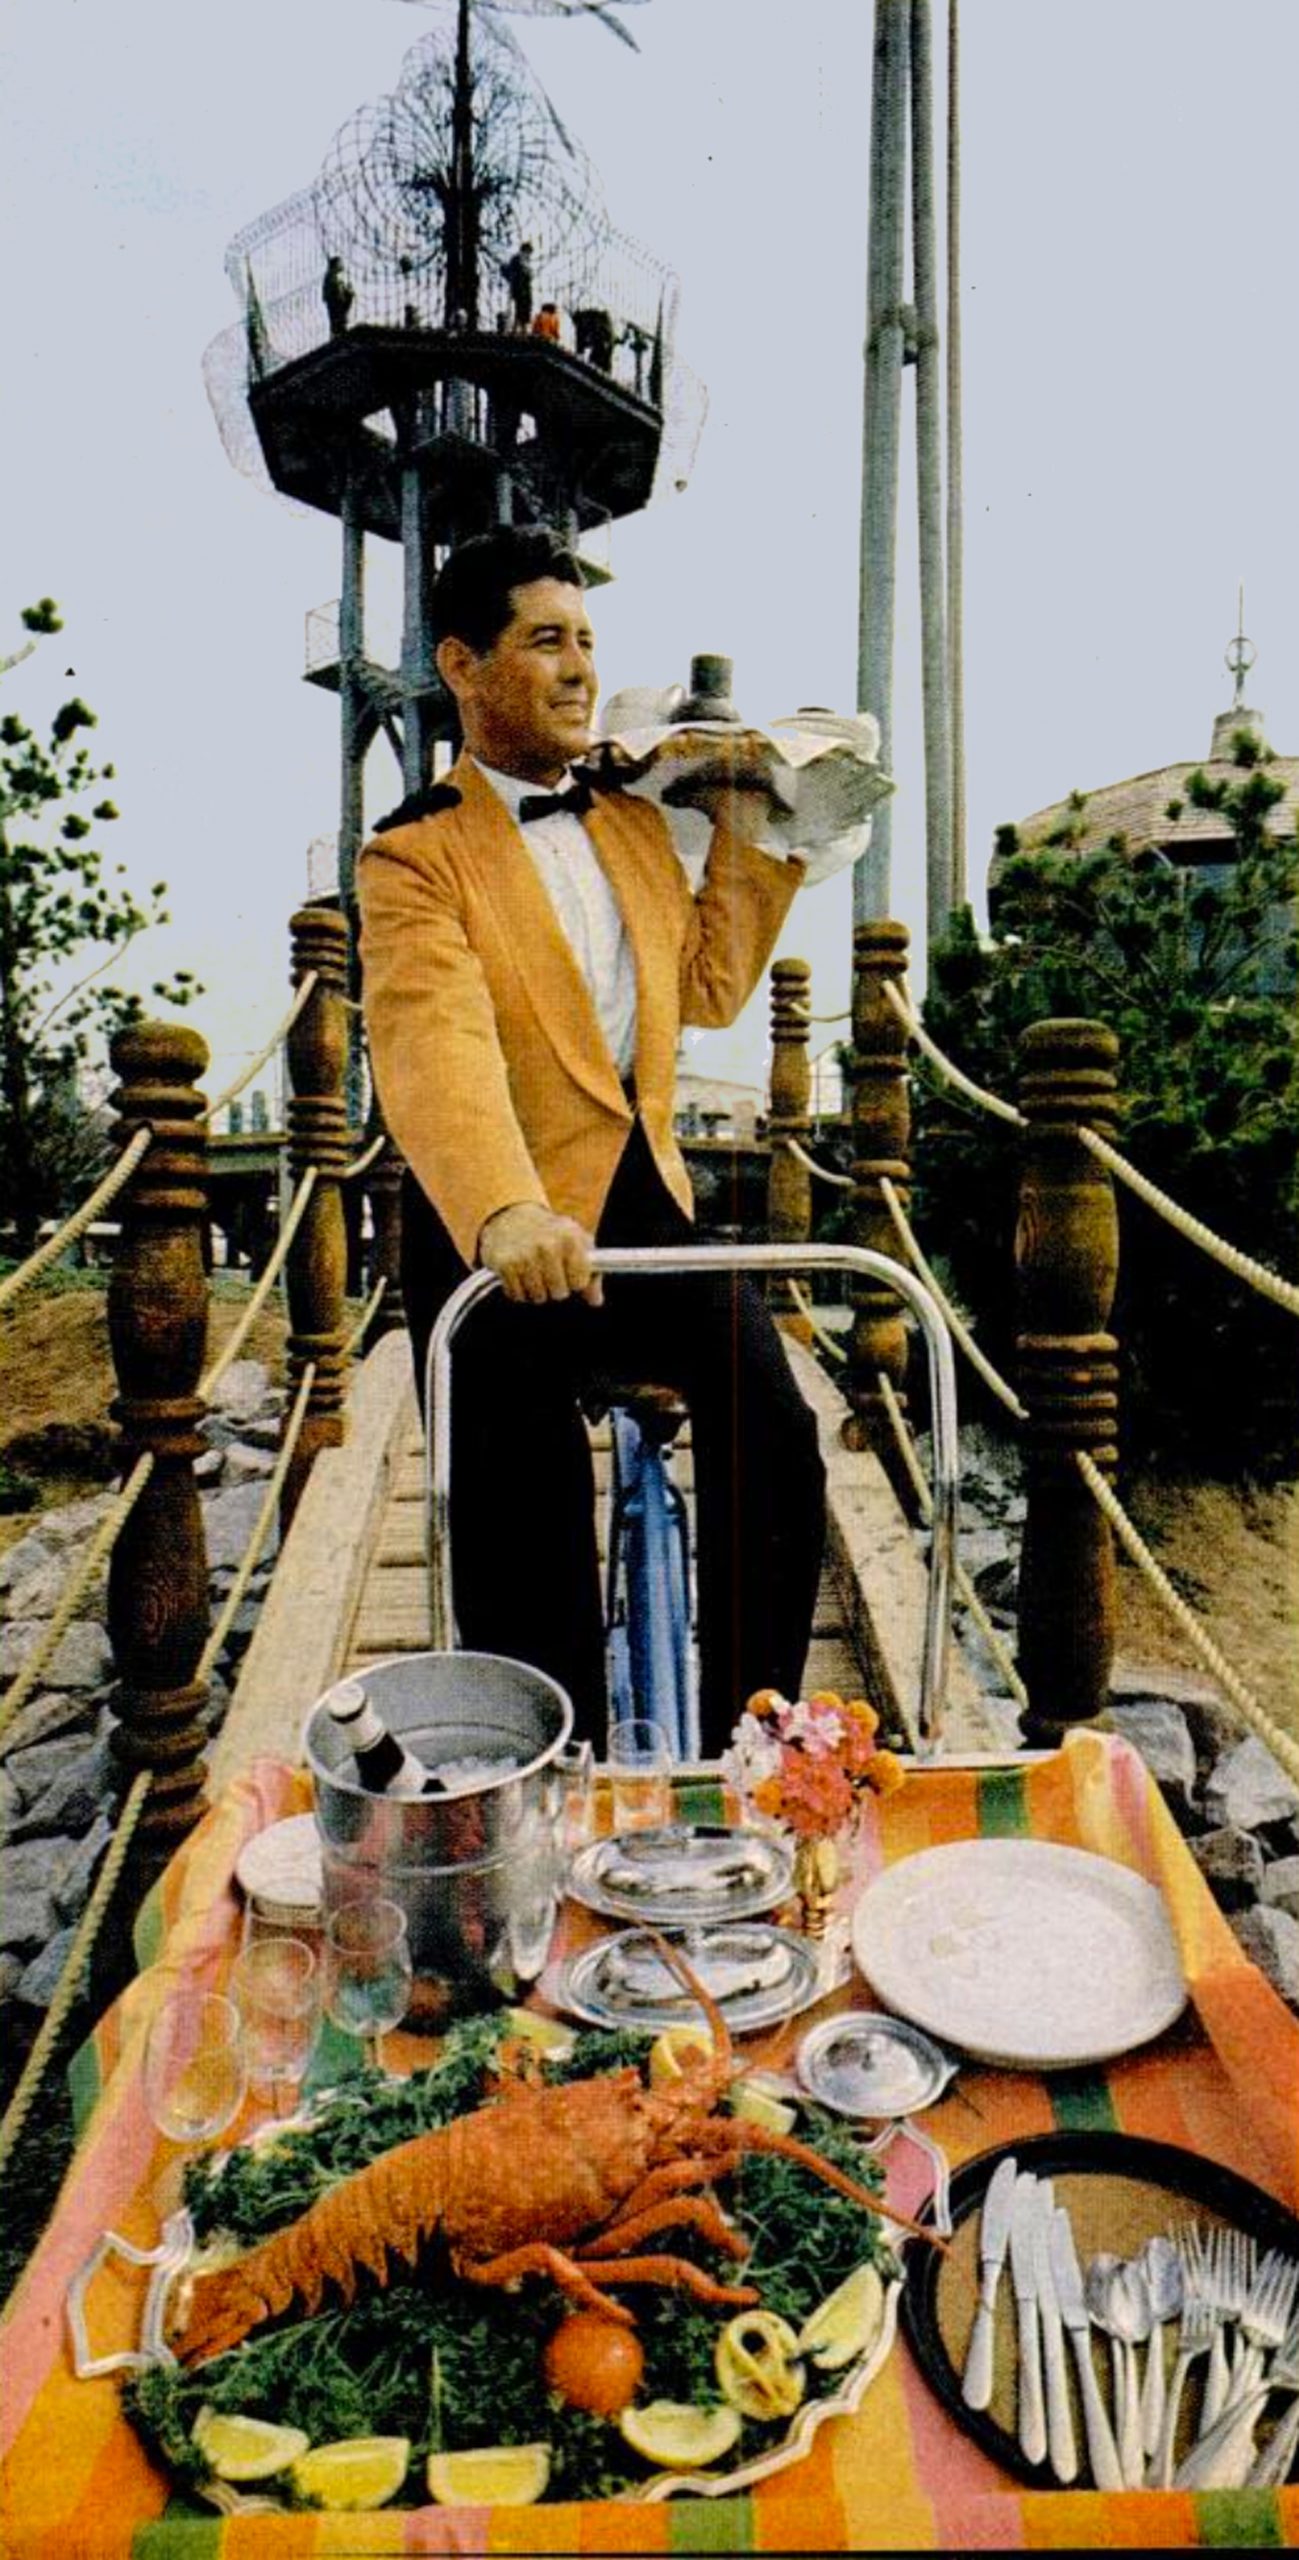 Waiter delivers room service, Vacation Village, 1963